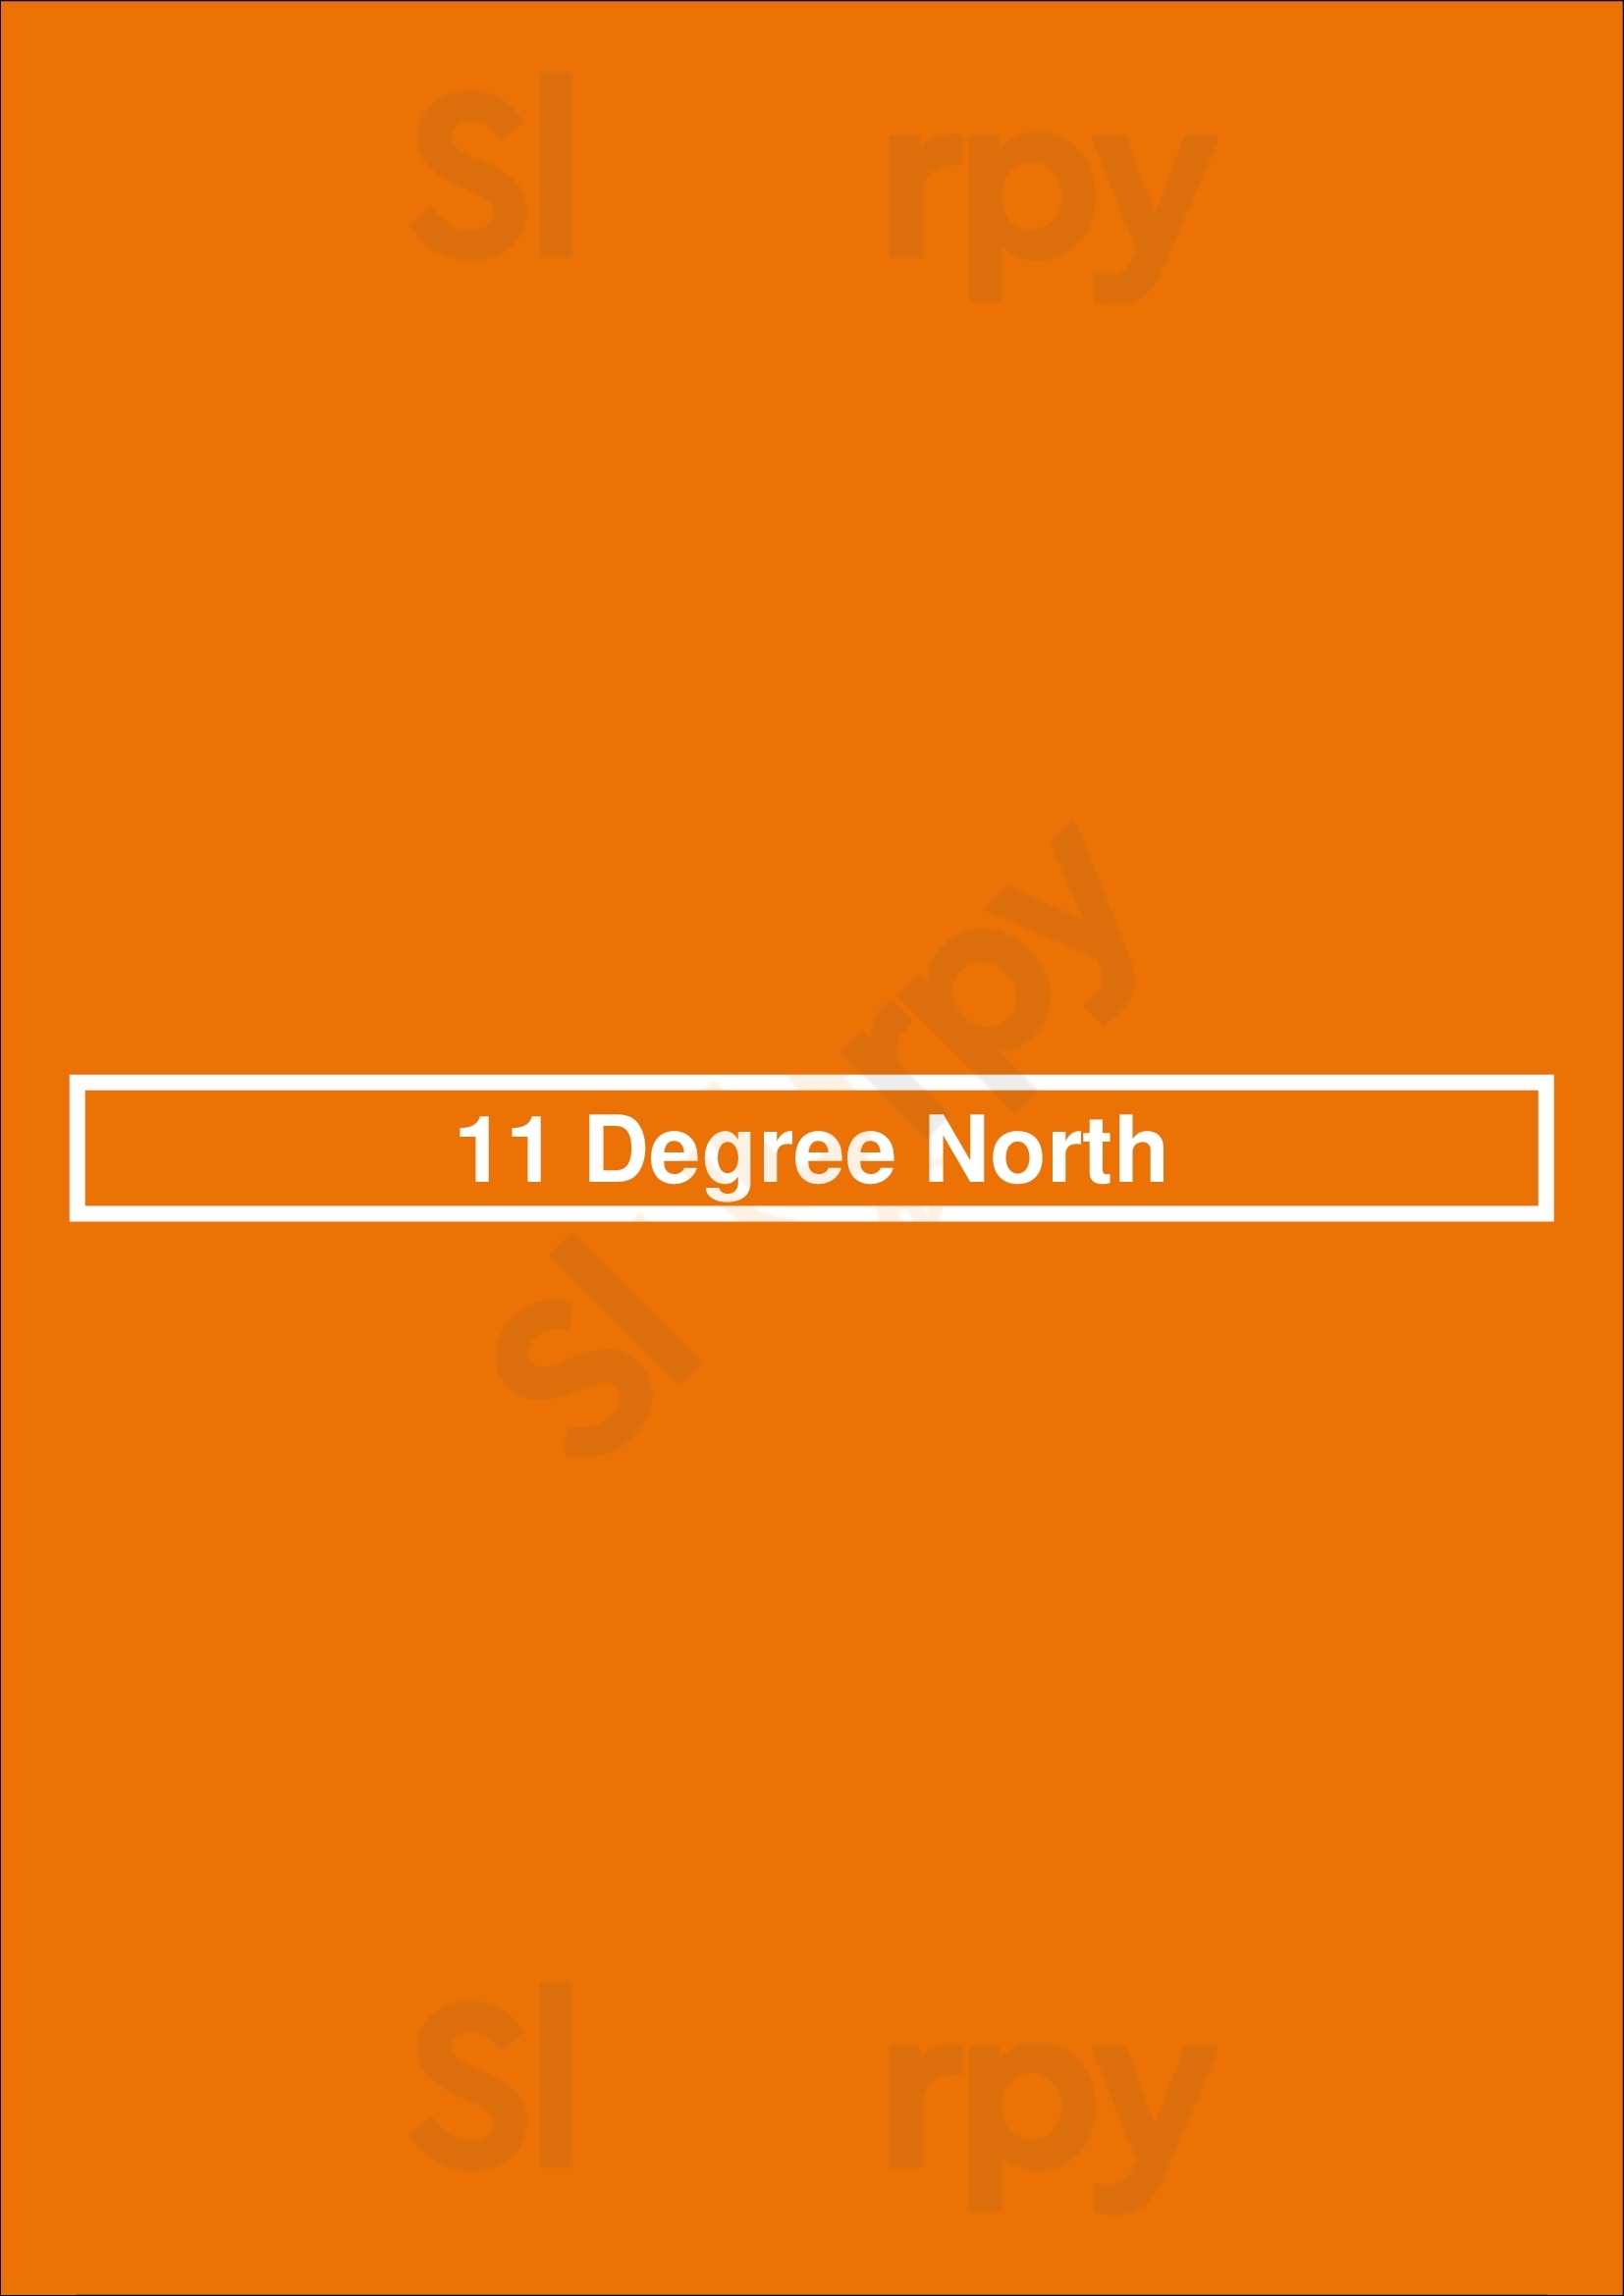 11 Degree North Chicago Menu - 1